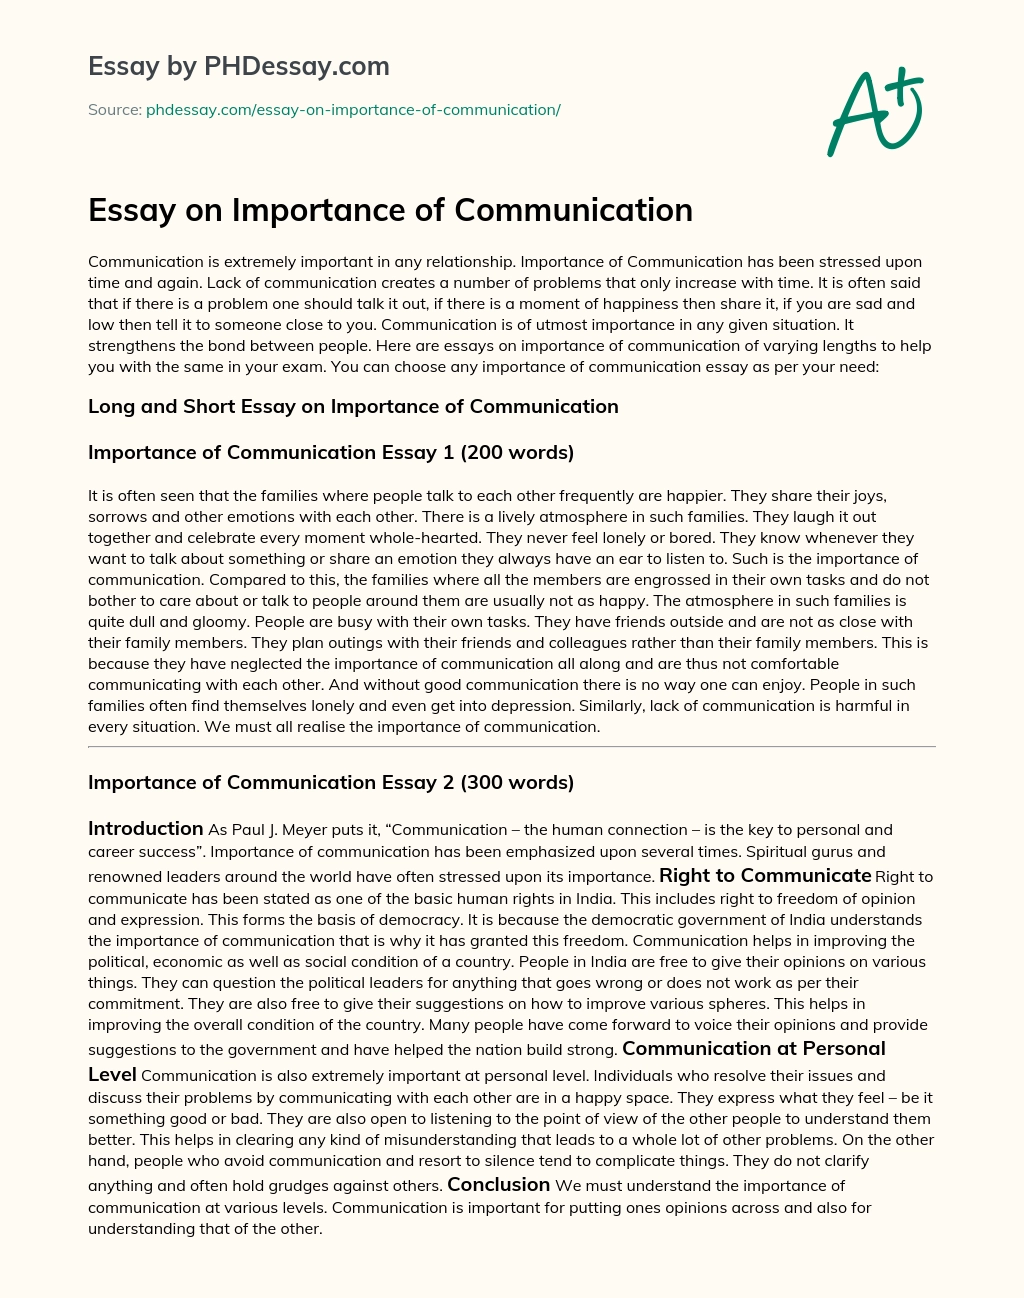 Essay on Importance of Communication essay